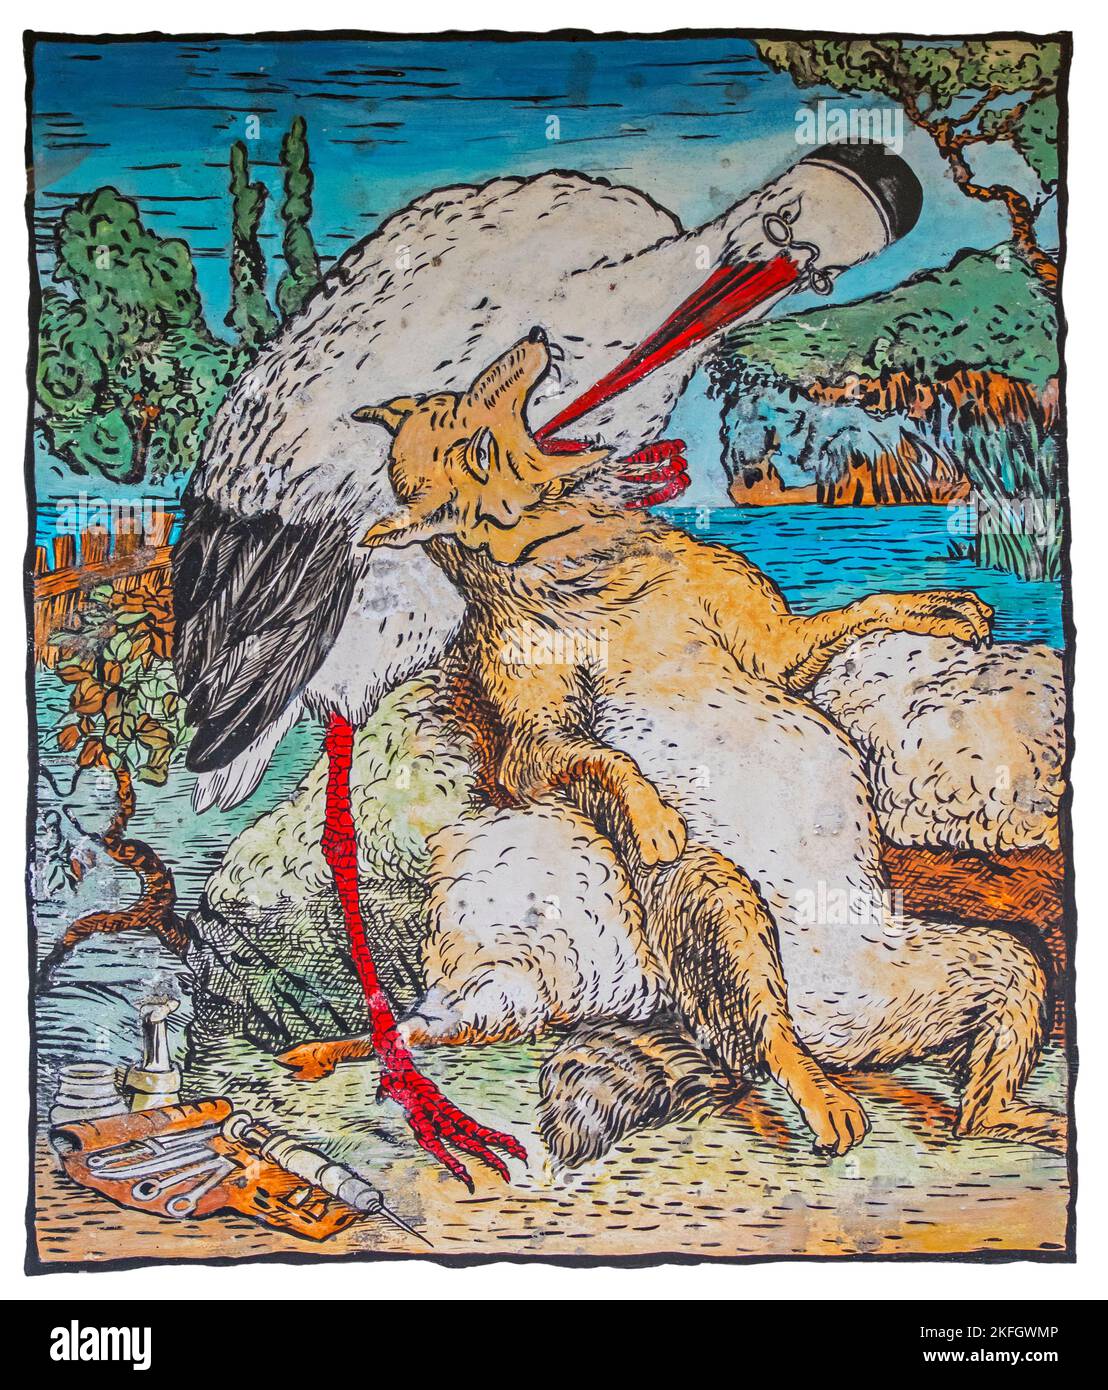 Le Loup et la Cigogne / The Wolf and the Crane, illustration by French illustrator Grandville in the book Fables by fabulist Jean de La Fontaine Stock Photo